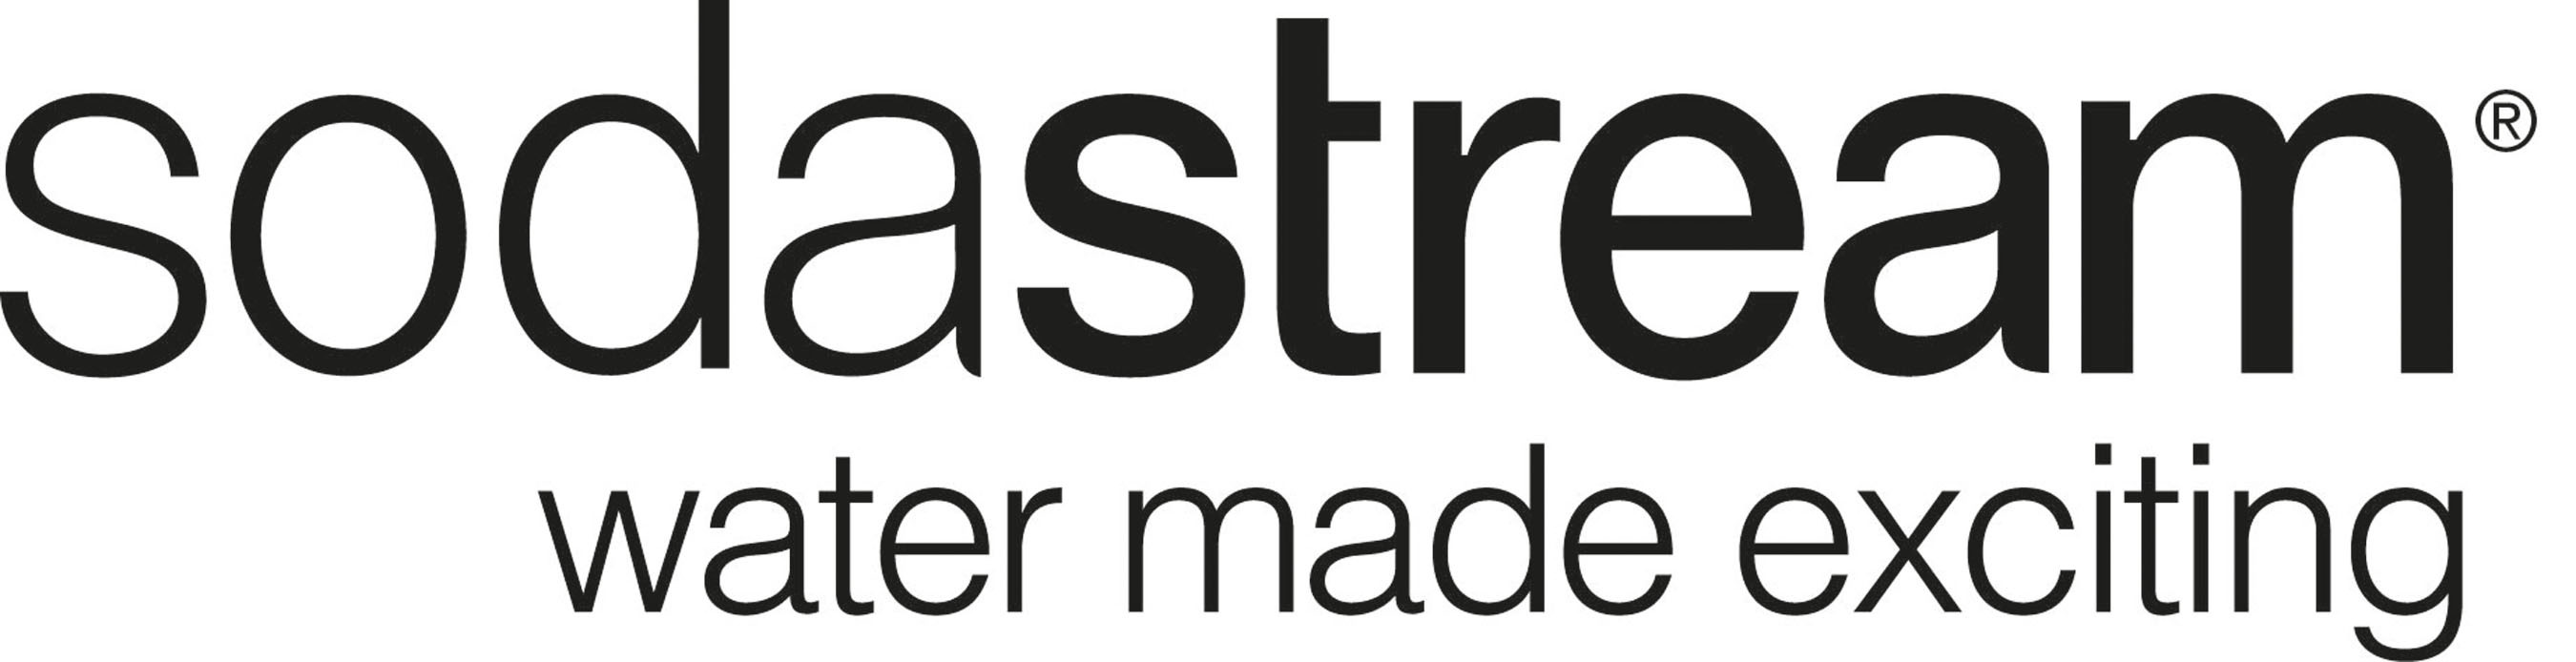 SodaStream logo.